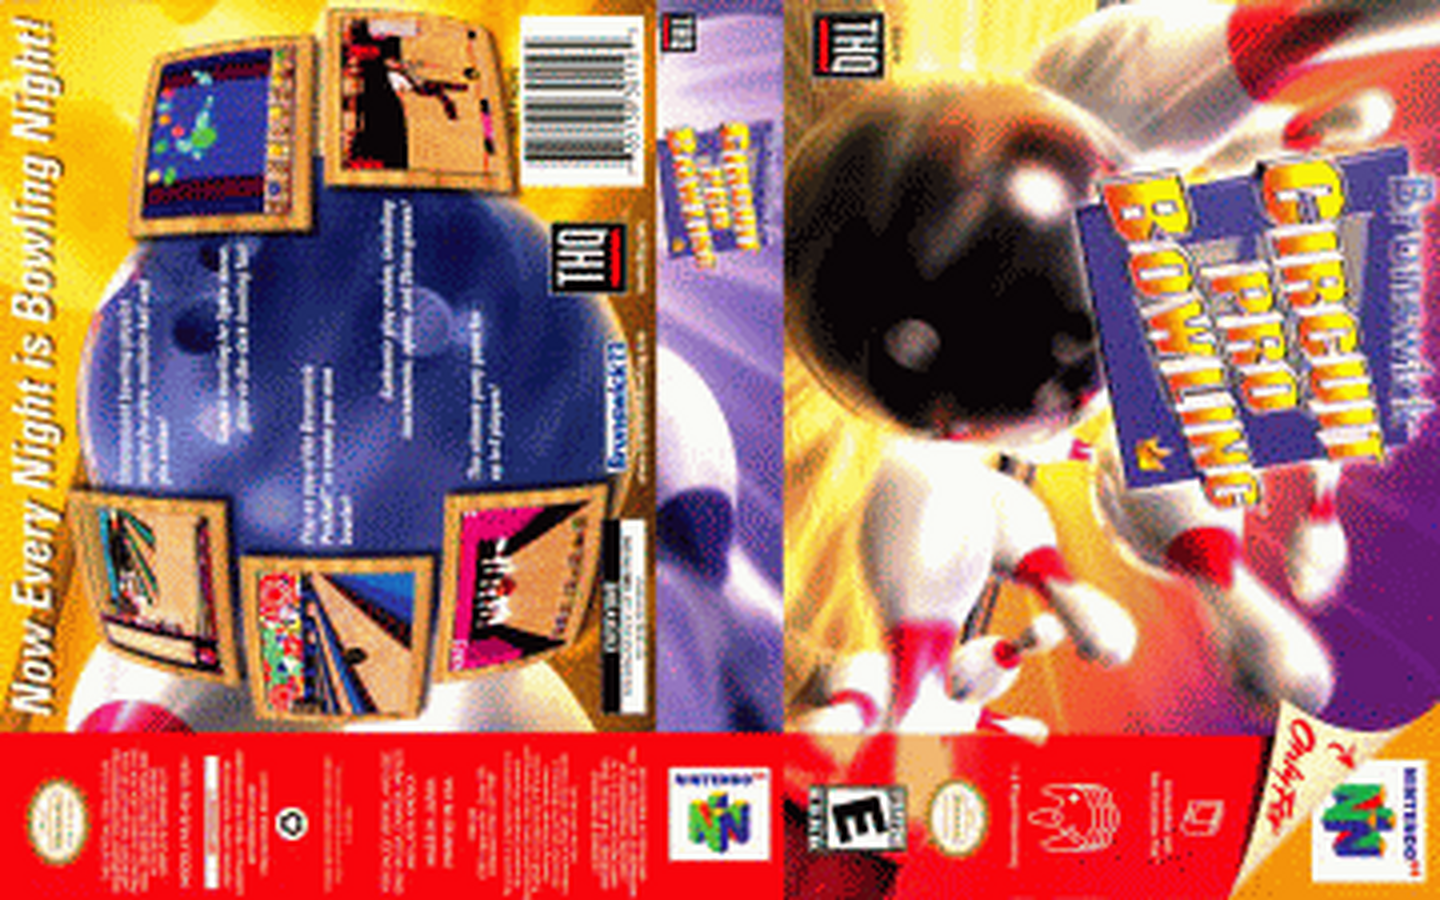 N64 GameBase Brunswick_Circuit_Pro_Bowling_(U) THQ 1999